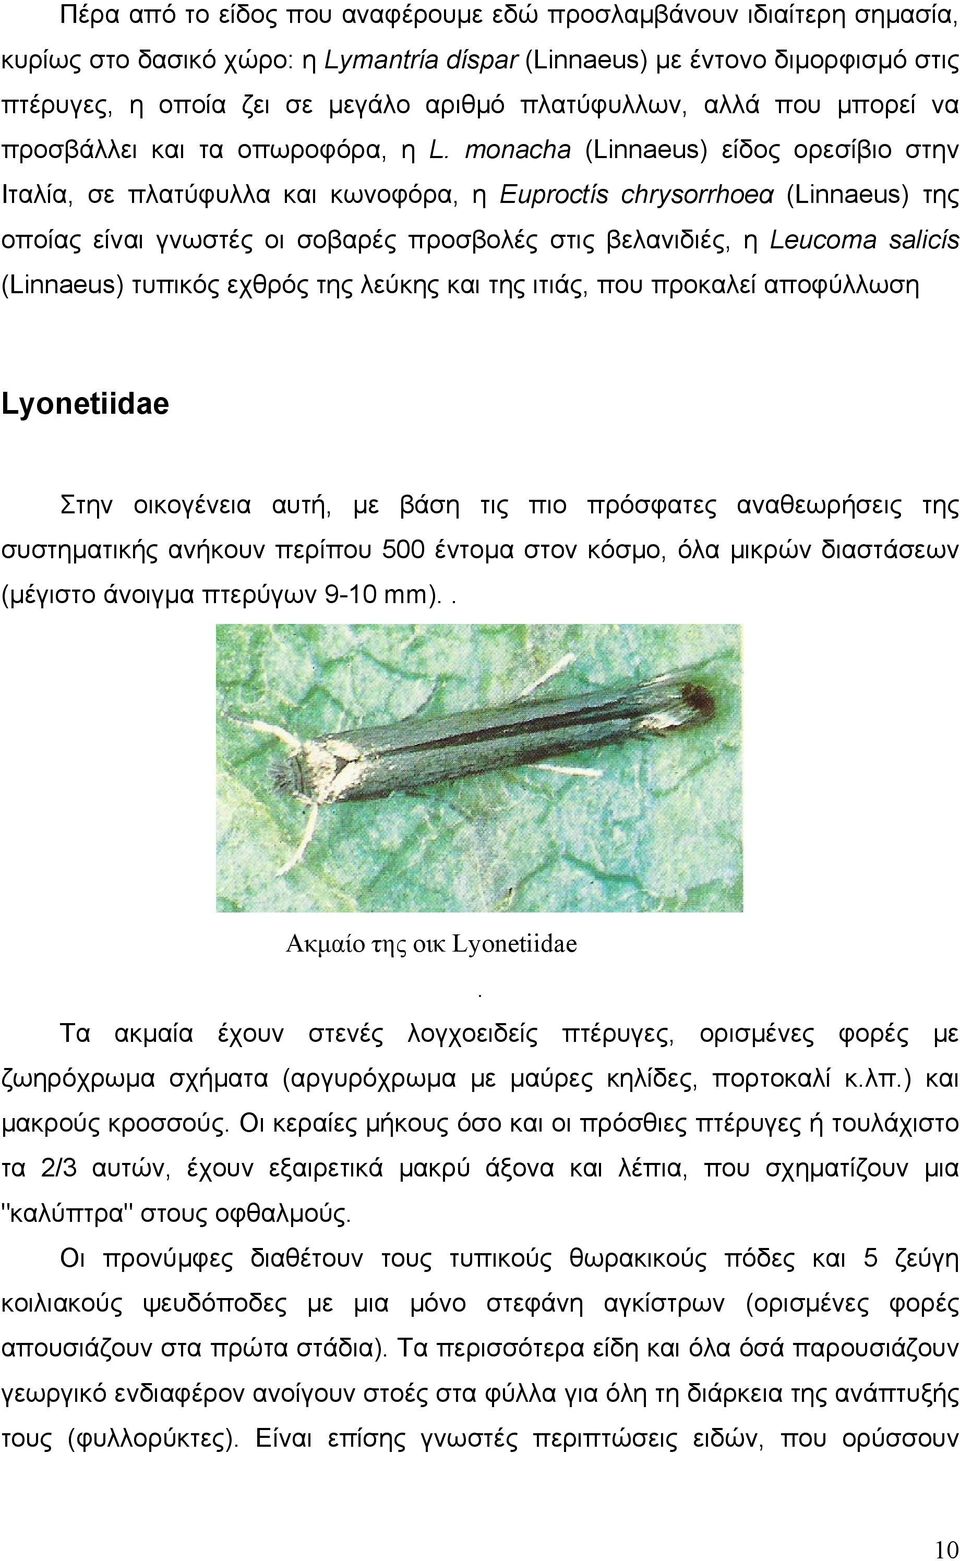 monacha (Linnaeus) είδος ορεσίβιο στην Ιταλία, σε πλατύφυλλα και κωνοφόρα, η Euproctίs chrysorrhοeα (Linnaeus) της οποίας είναι γνωστές οι σοβαρές προσβολές στις βελανιδιές, η Leucoma salicίs